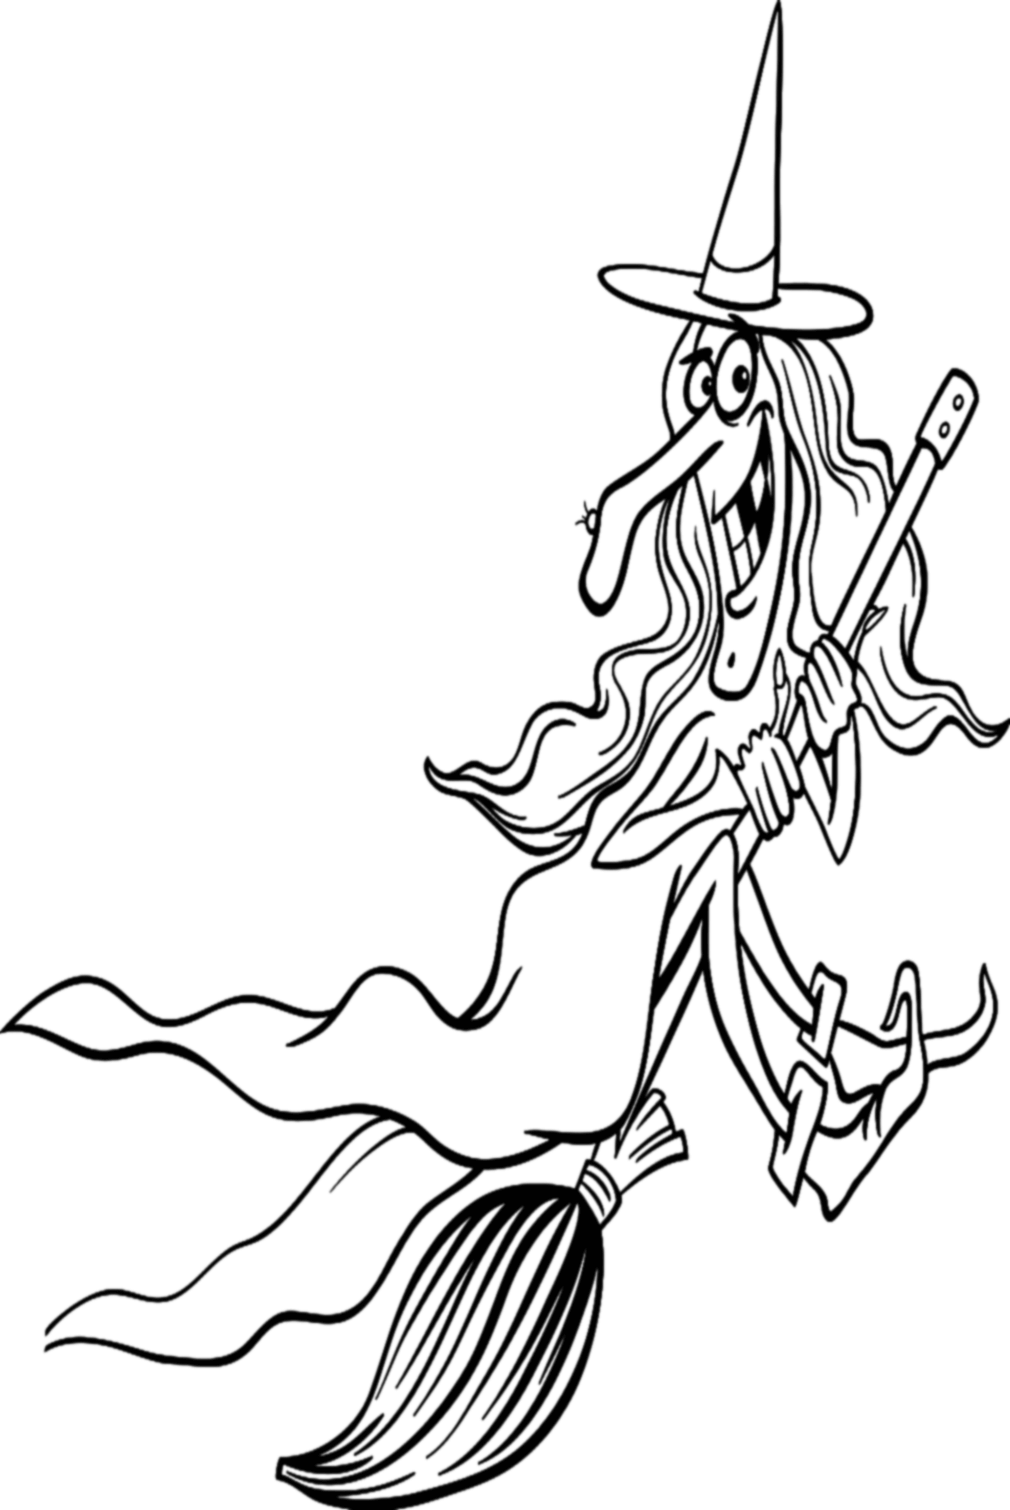 Раскраска Мультяшная шляпа ведьмы из шляпы ведьмы